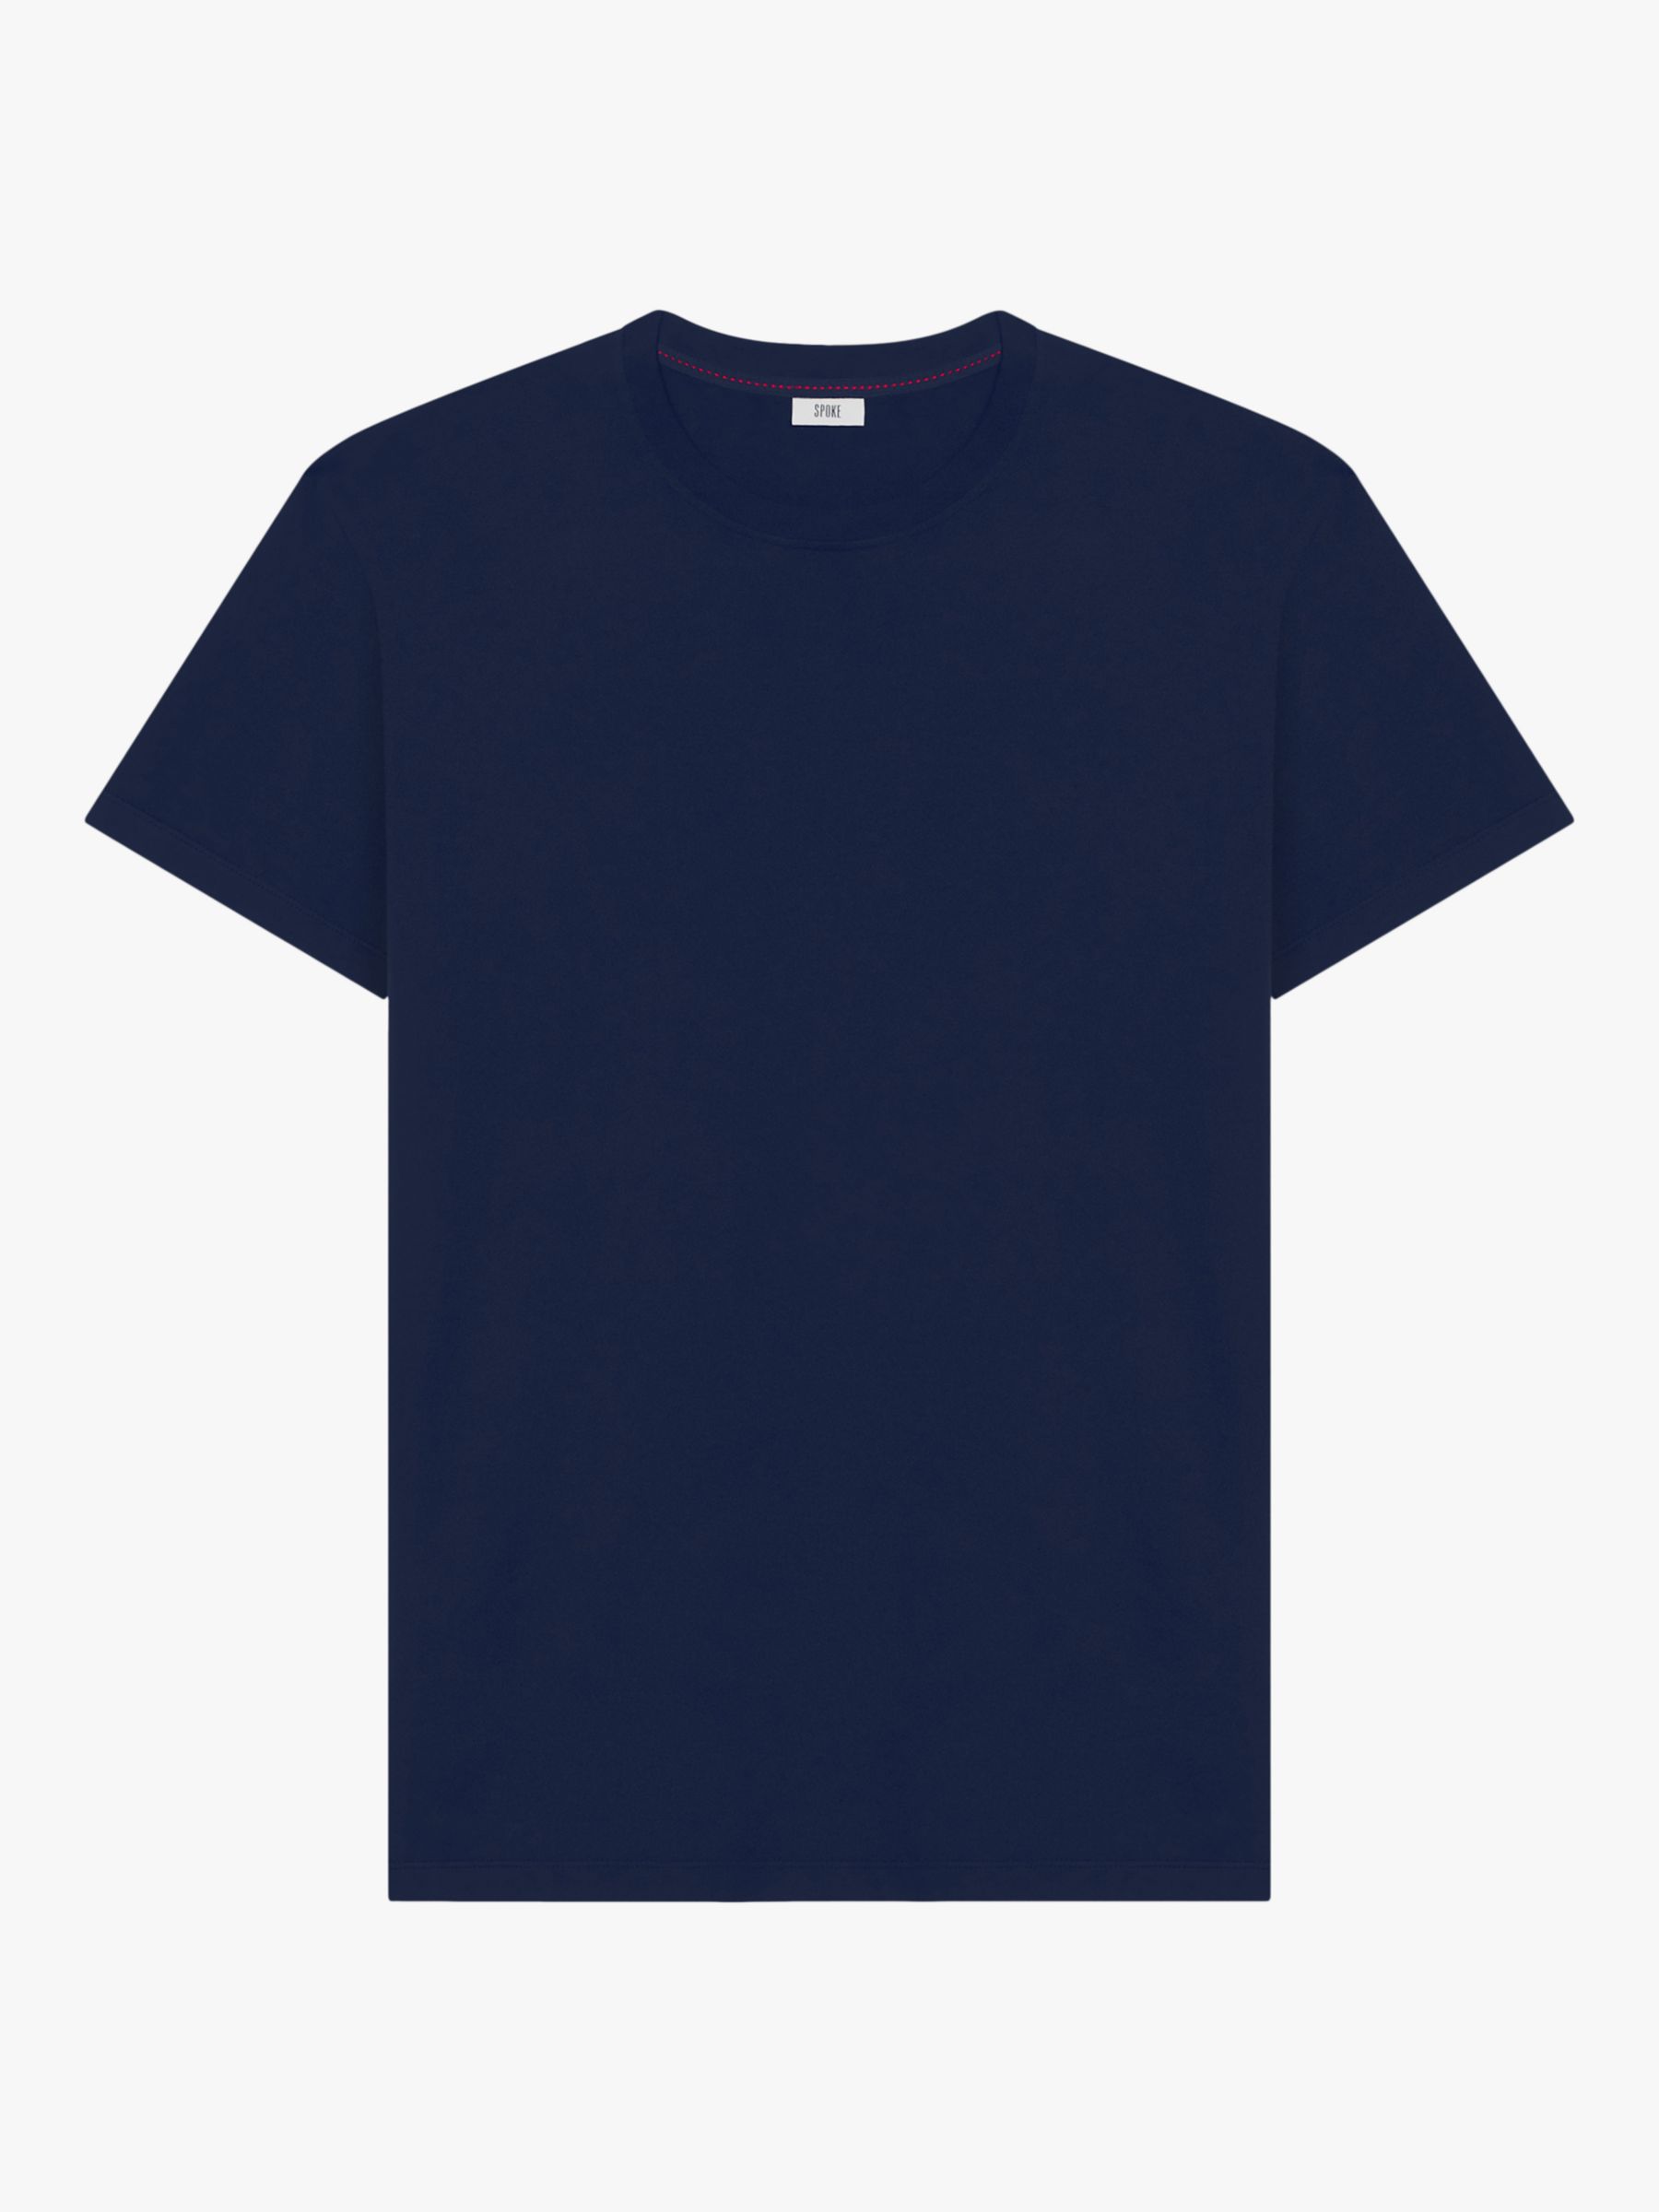 Buy SPOKE Cotton Slim Fit Crew Neck T-Shirt Online at johnlewis.com